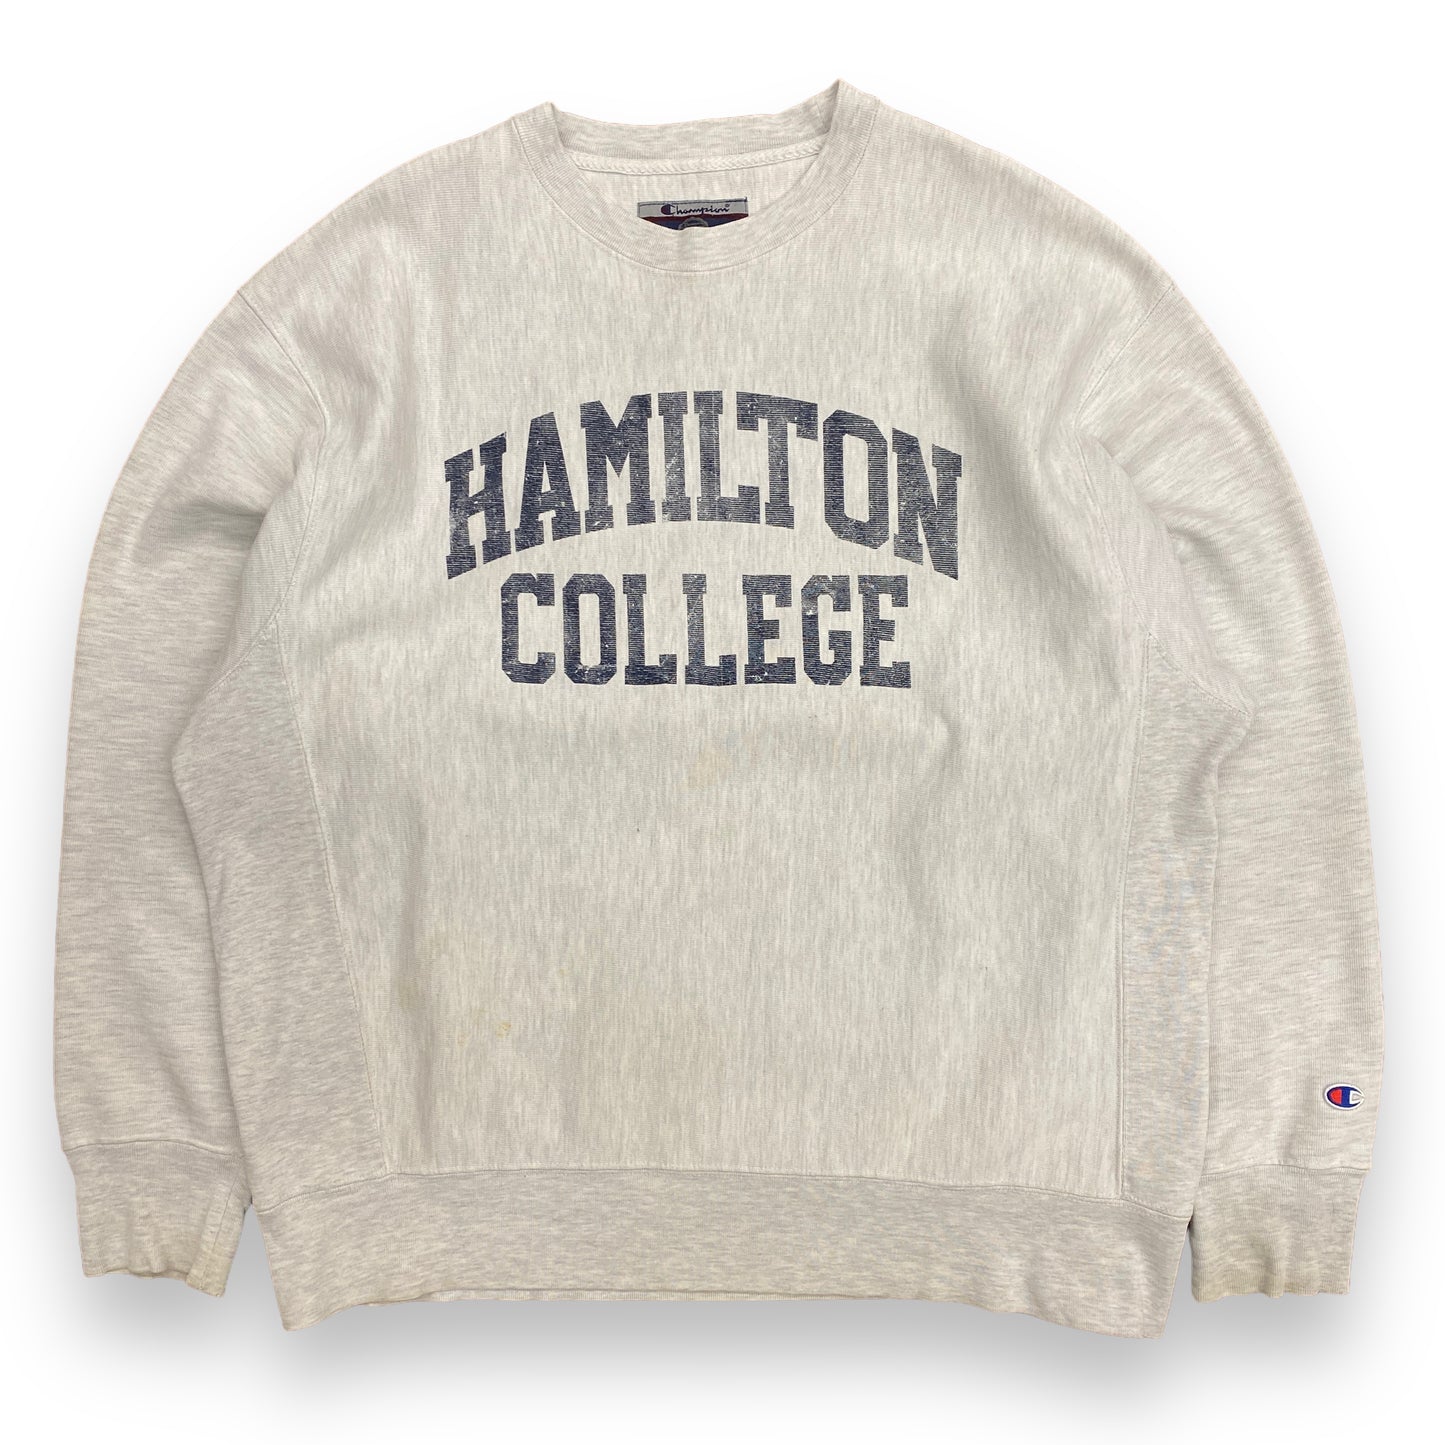 Vintage Champion Reverse Weave "Hamilton College" Crewneck Sweatshirt - Size Large